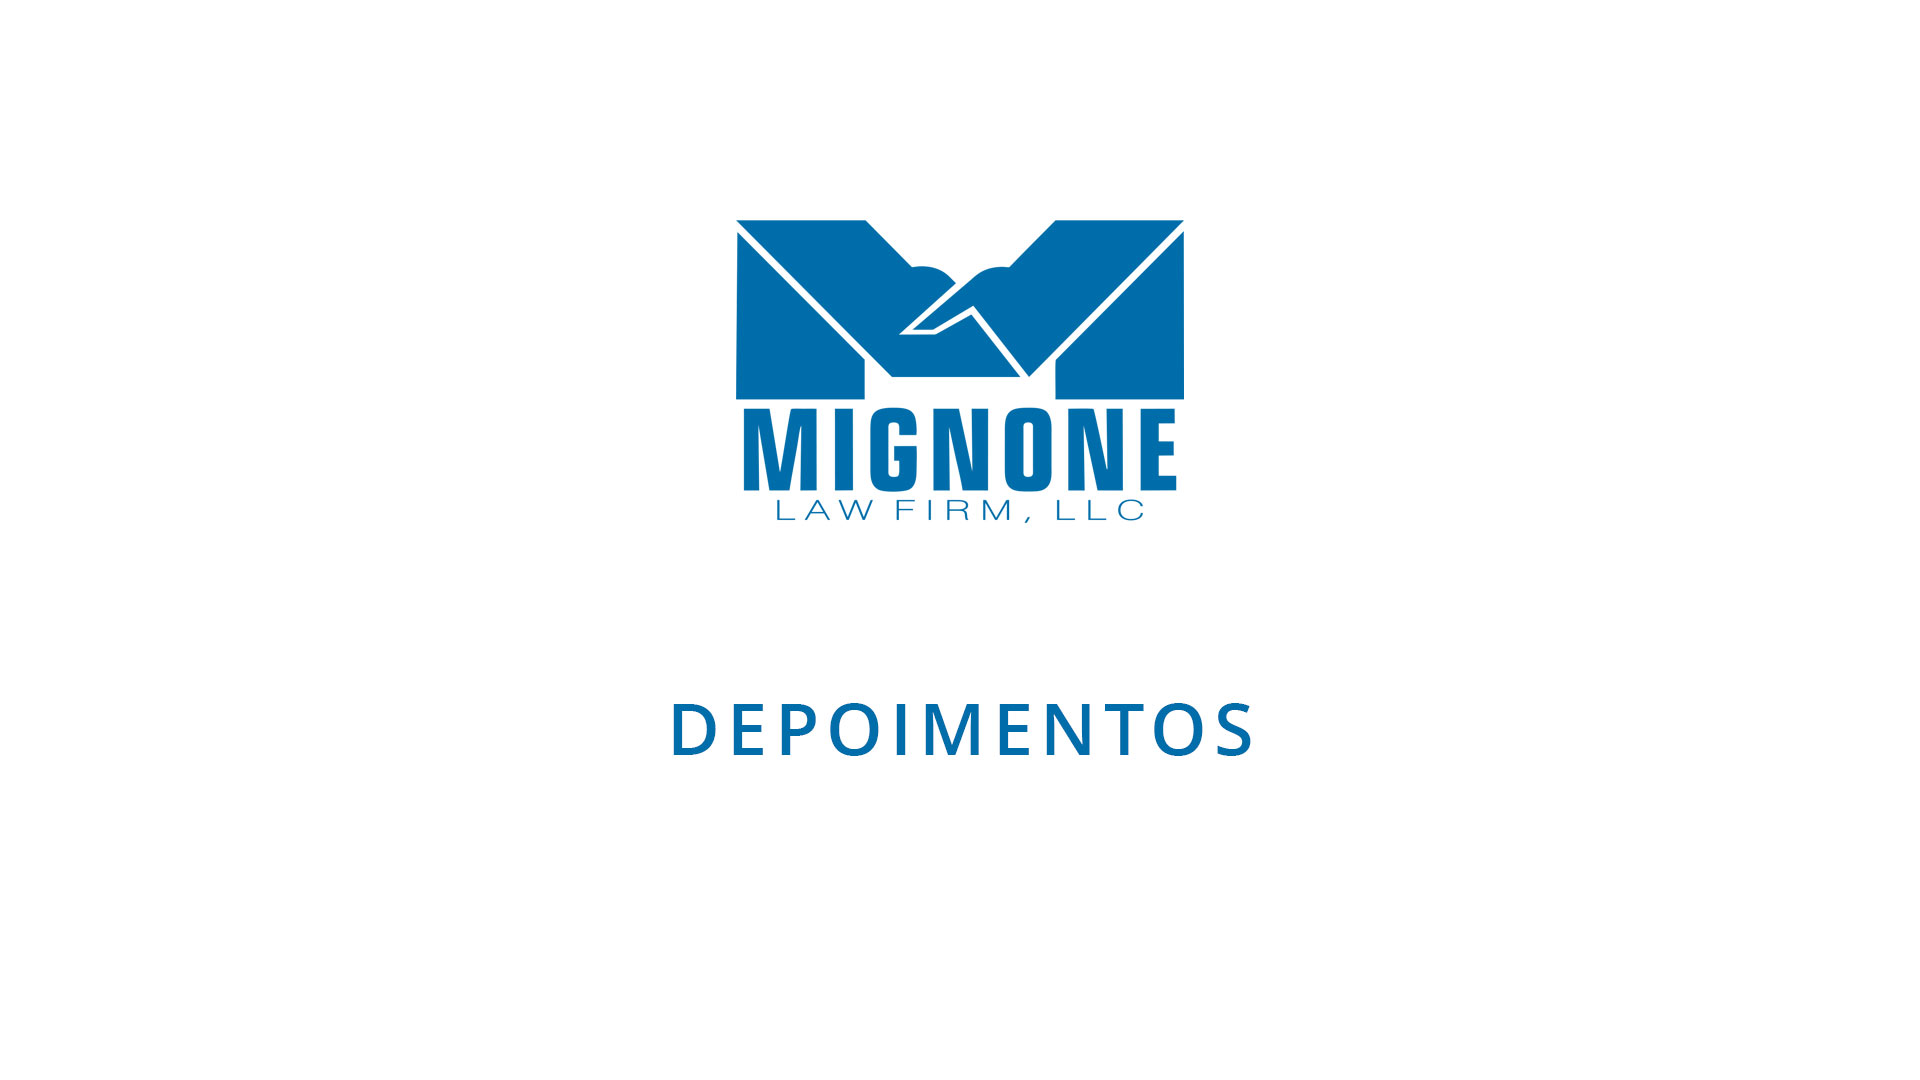 Mignone Law Firm